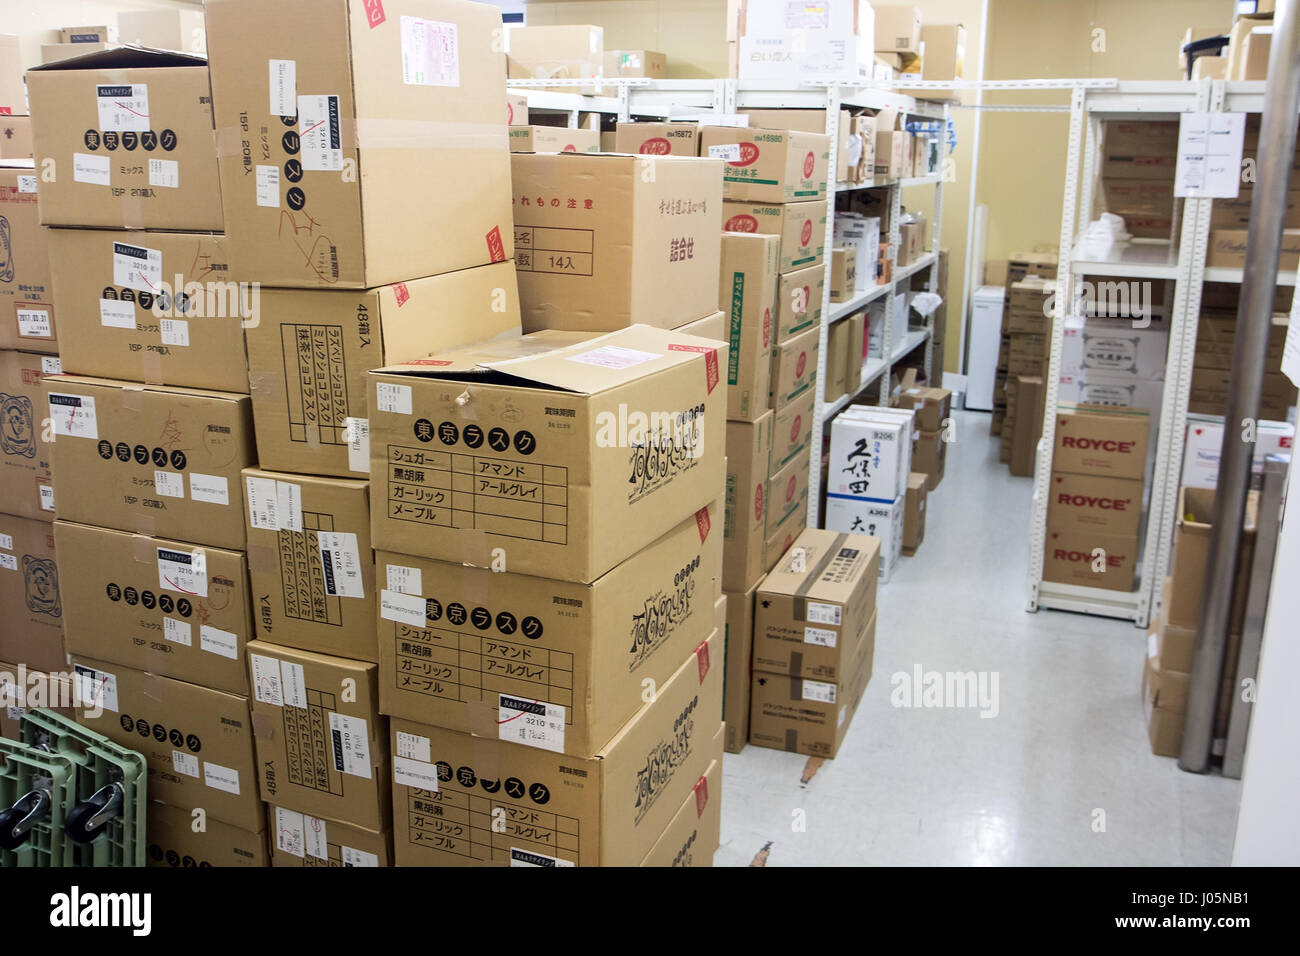 Doncella claro fósil Cajas de cartón en un almacén almacén. Almacenamiento de mercancías en los  estantes.cajas de papel japonés con mercancías en almacén Fotografía de  stock - Alamy